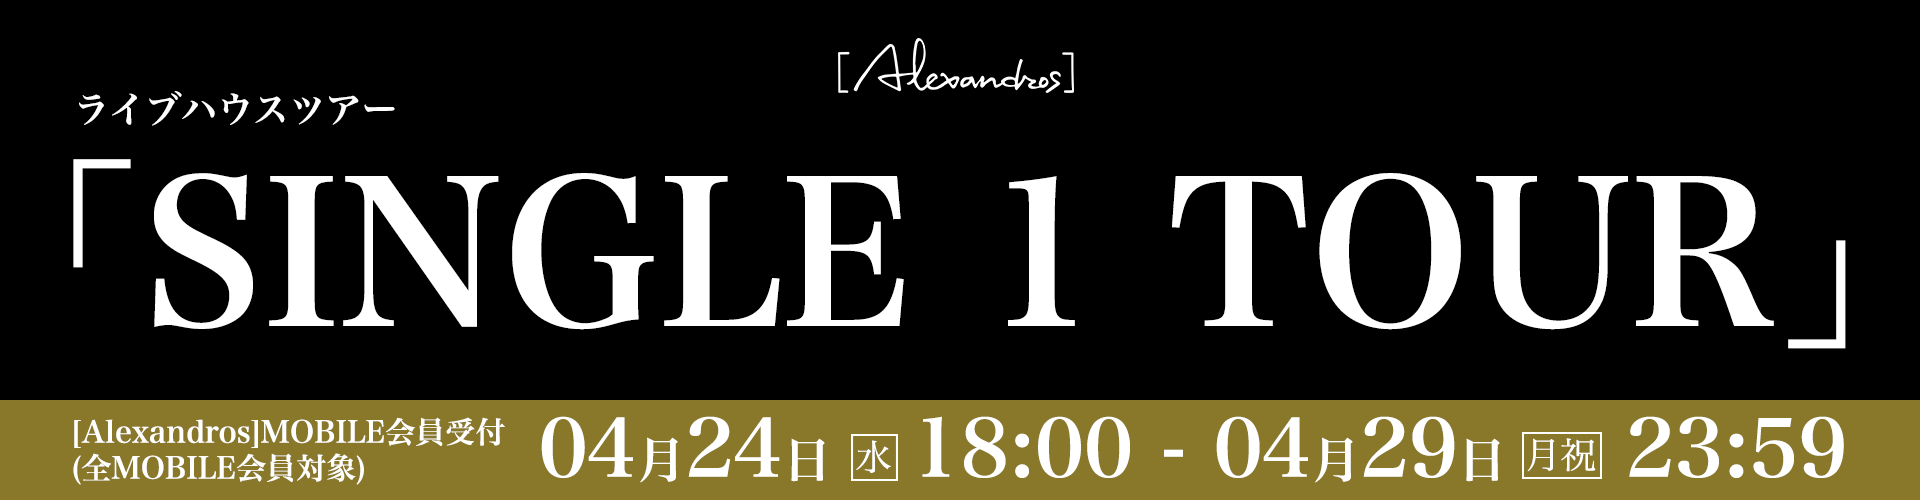 [Alexandros] ライブハウスツアー「SINGLE 1 TOUR」[Alexandros]MOBILE会員限定受付(全MOBILE会員対象)